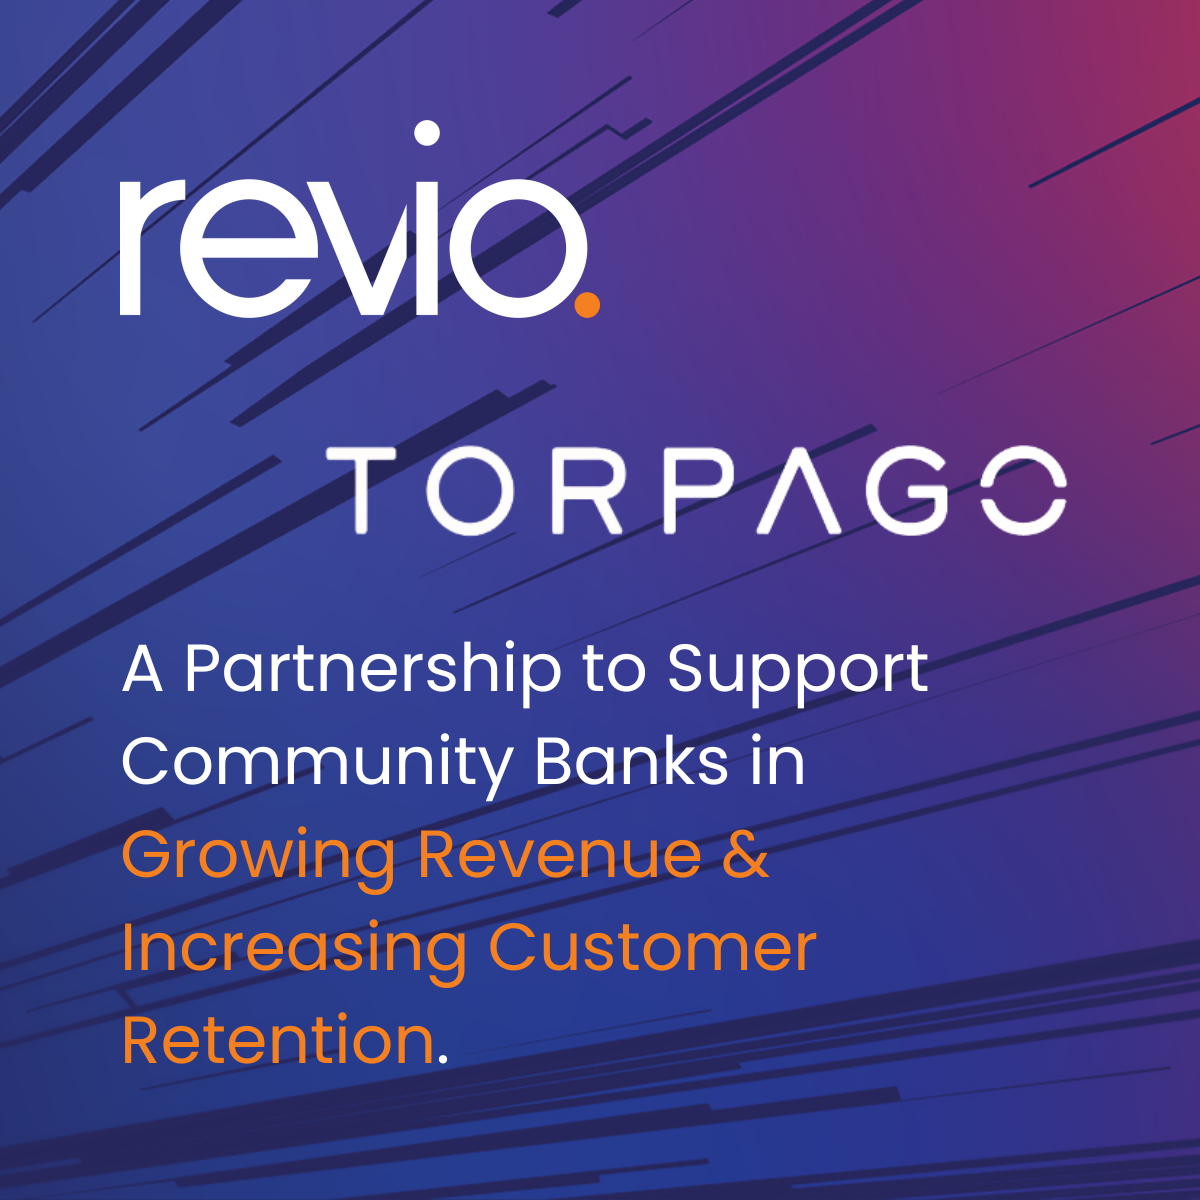 Revio & Torpago announce a strategic partnership